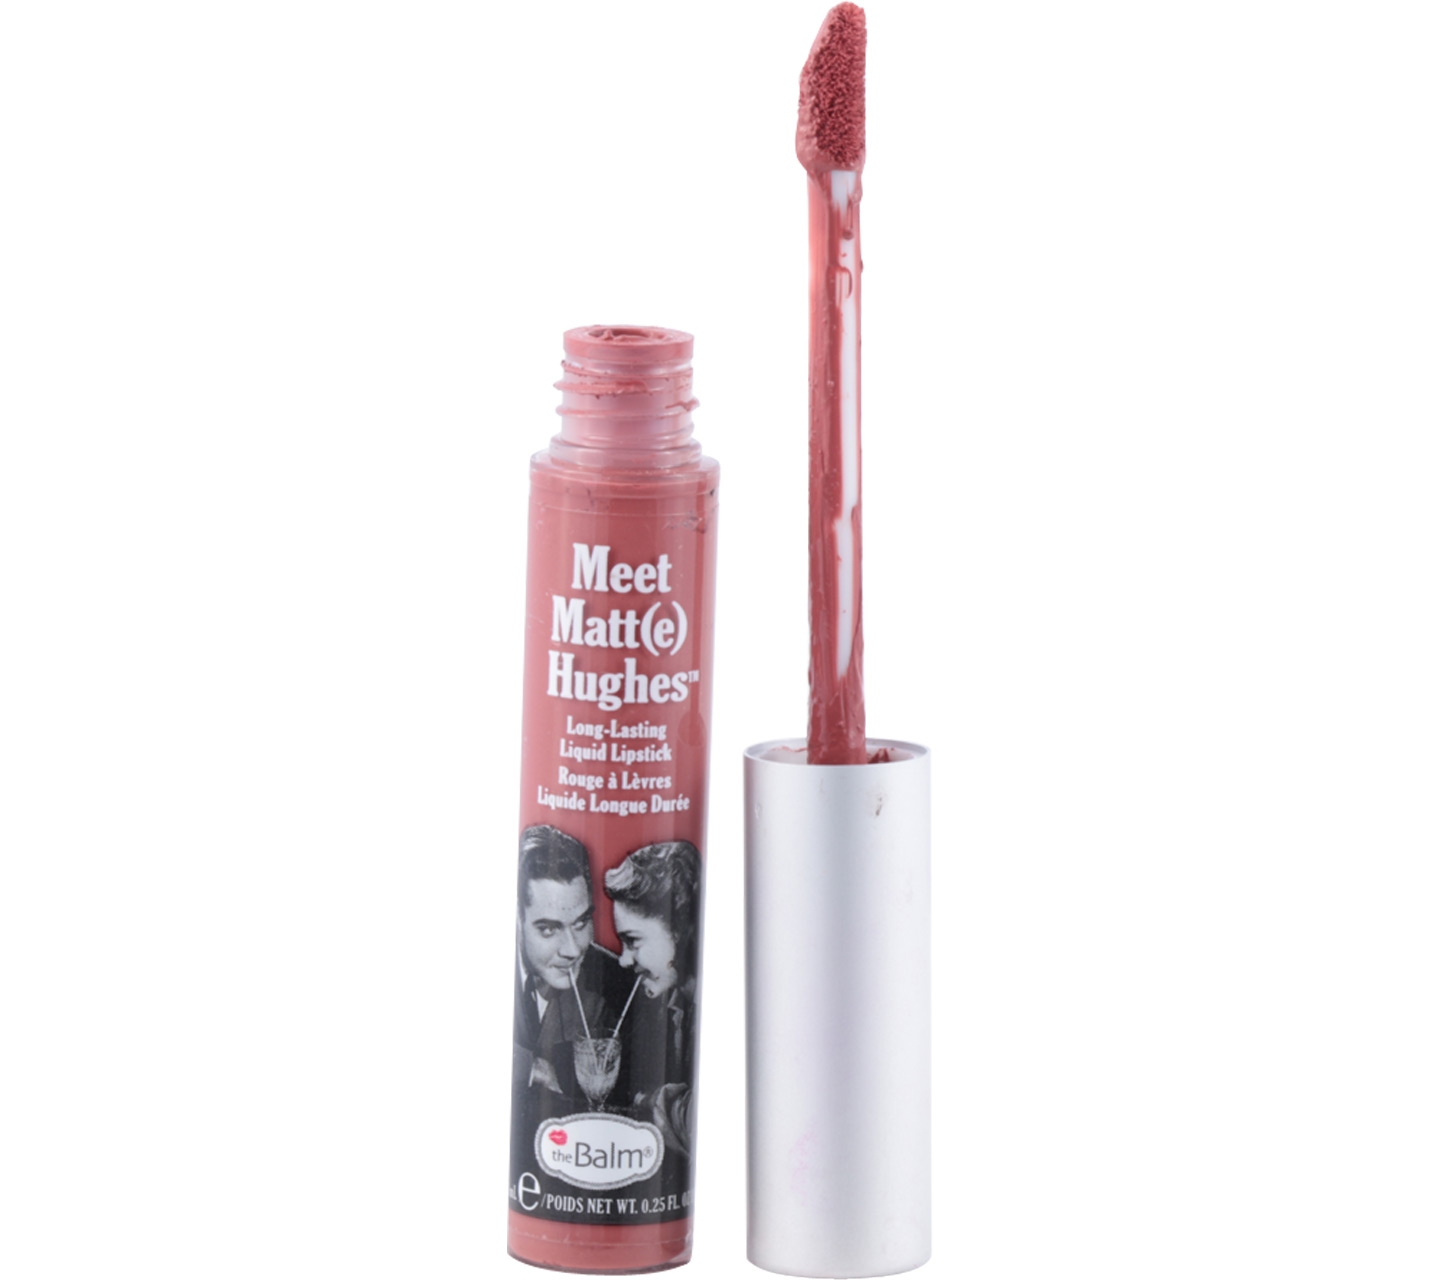 The Balm Sincere Meet Matte Hughes Long Lasting Liquid Lipstick Lips